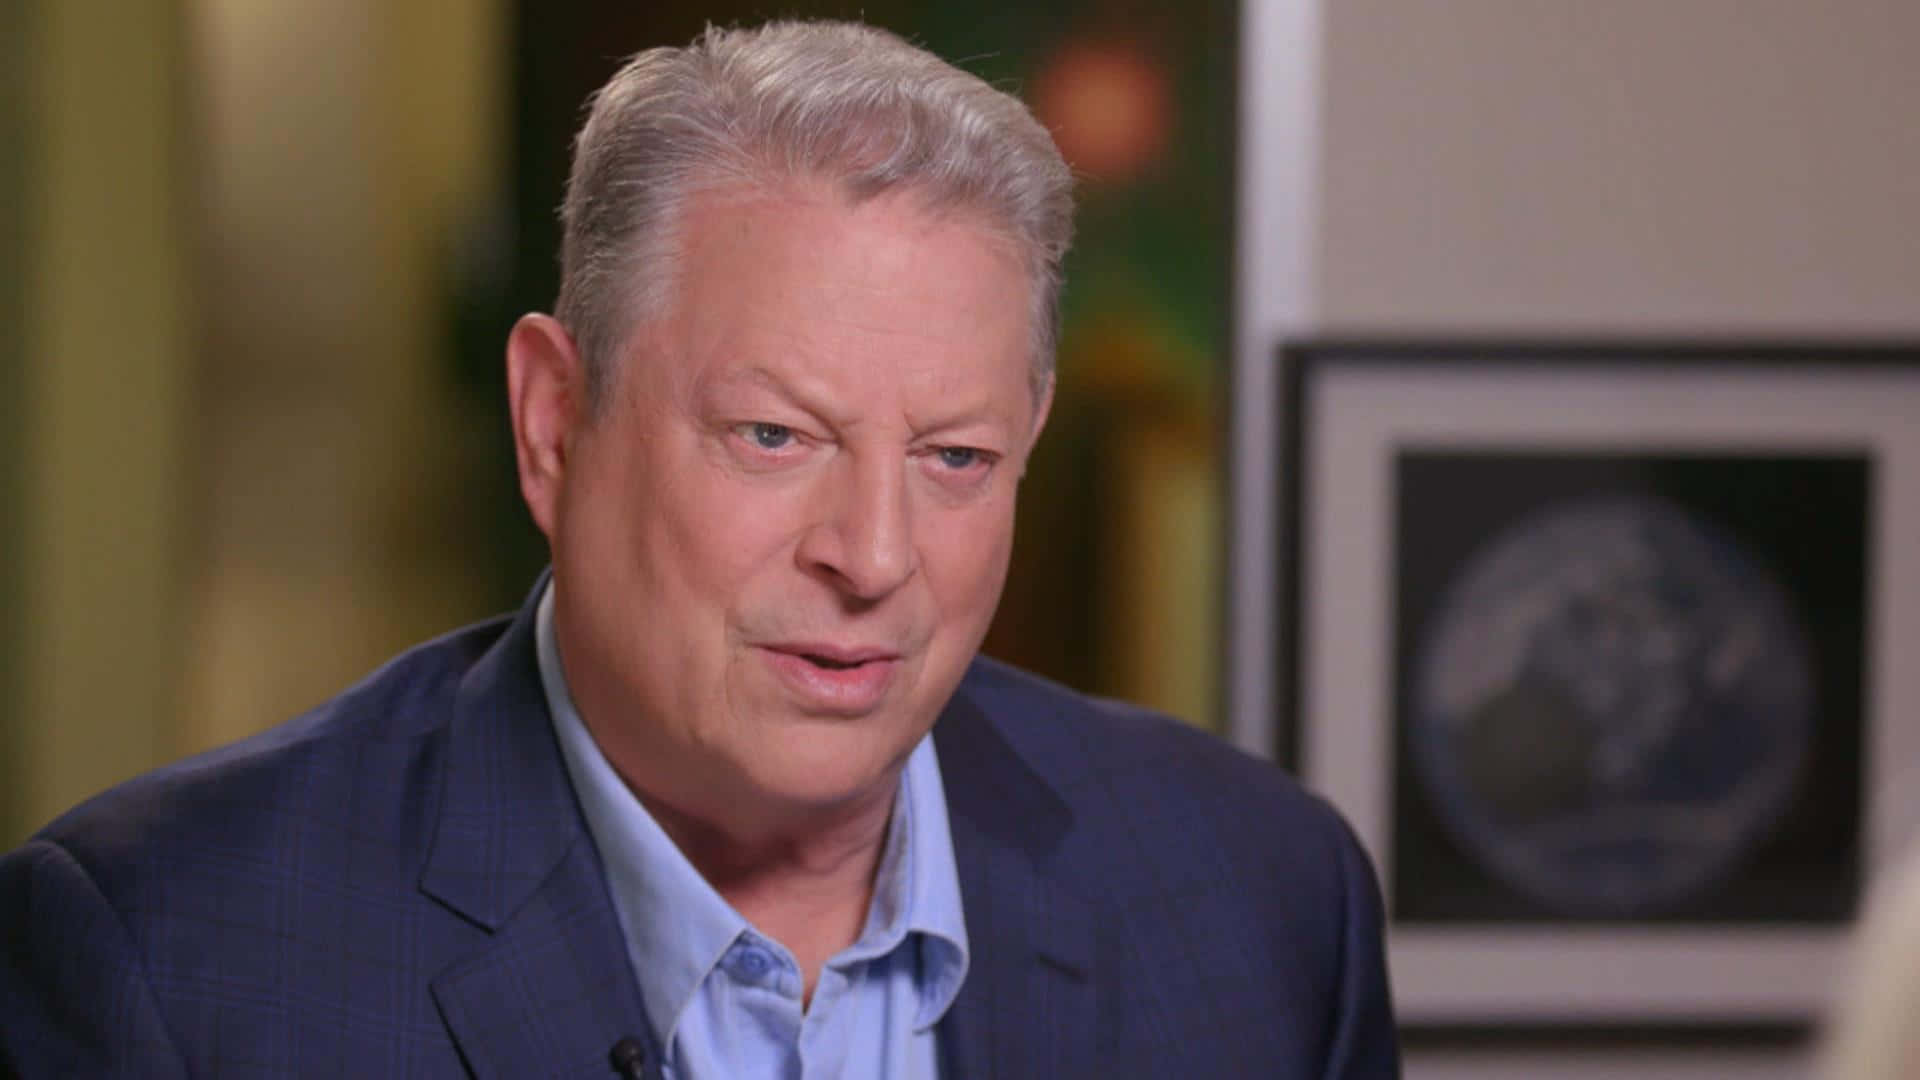 Al Gore Wearing A Navy Blue Suit Wallpaper